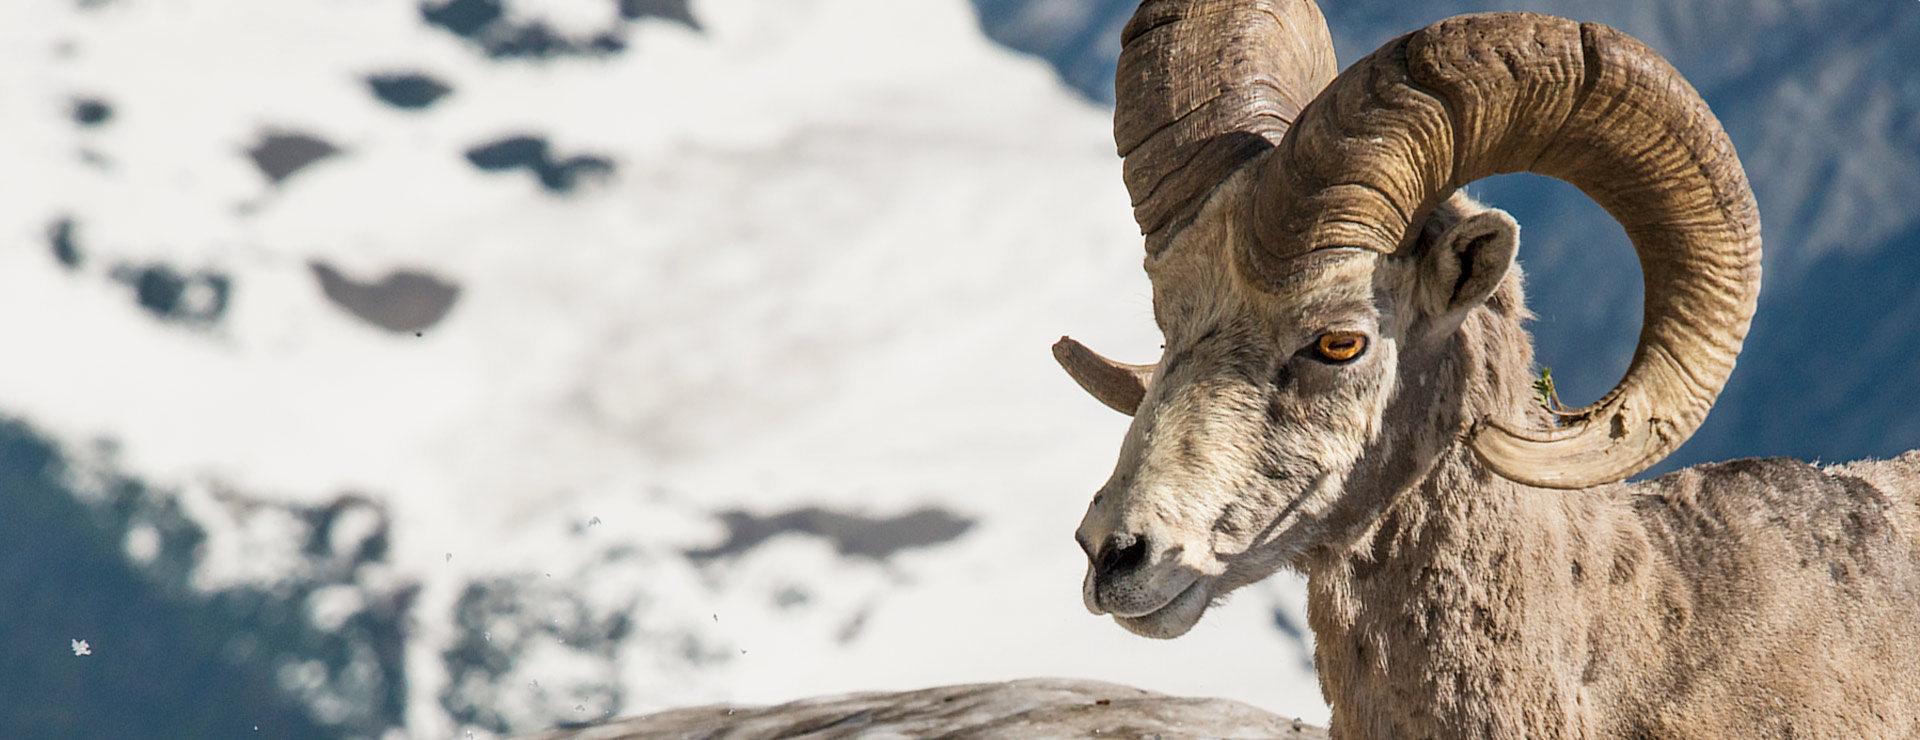 Bighorn sheep photo by Tim Rains (NPS)